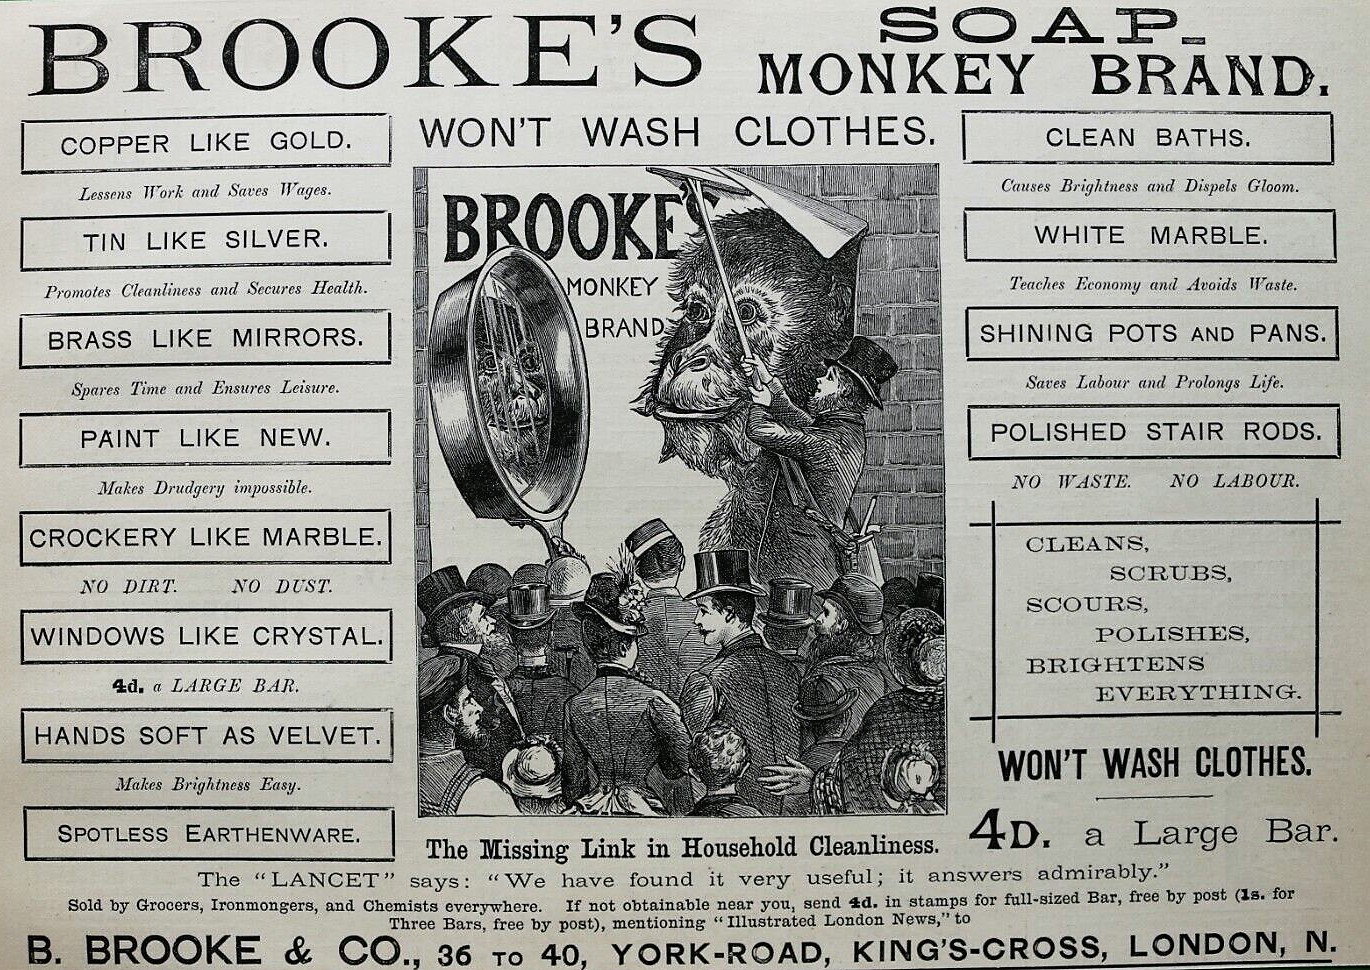 Brooke_s_Monkey_Brand_Soap Graphic 4 juin 1887